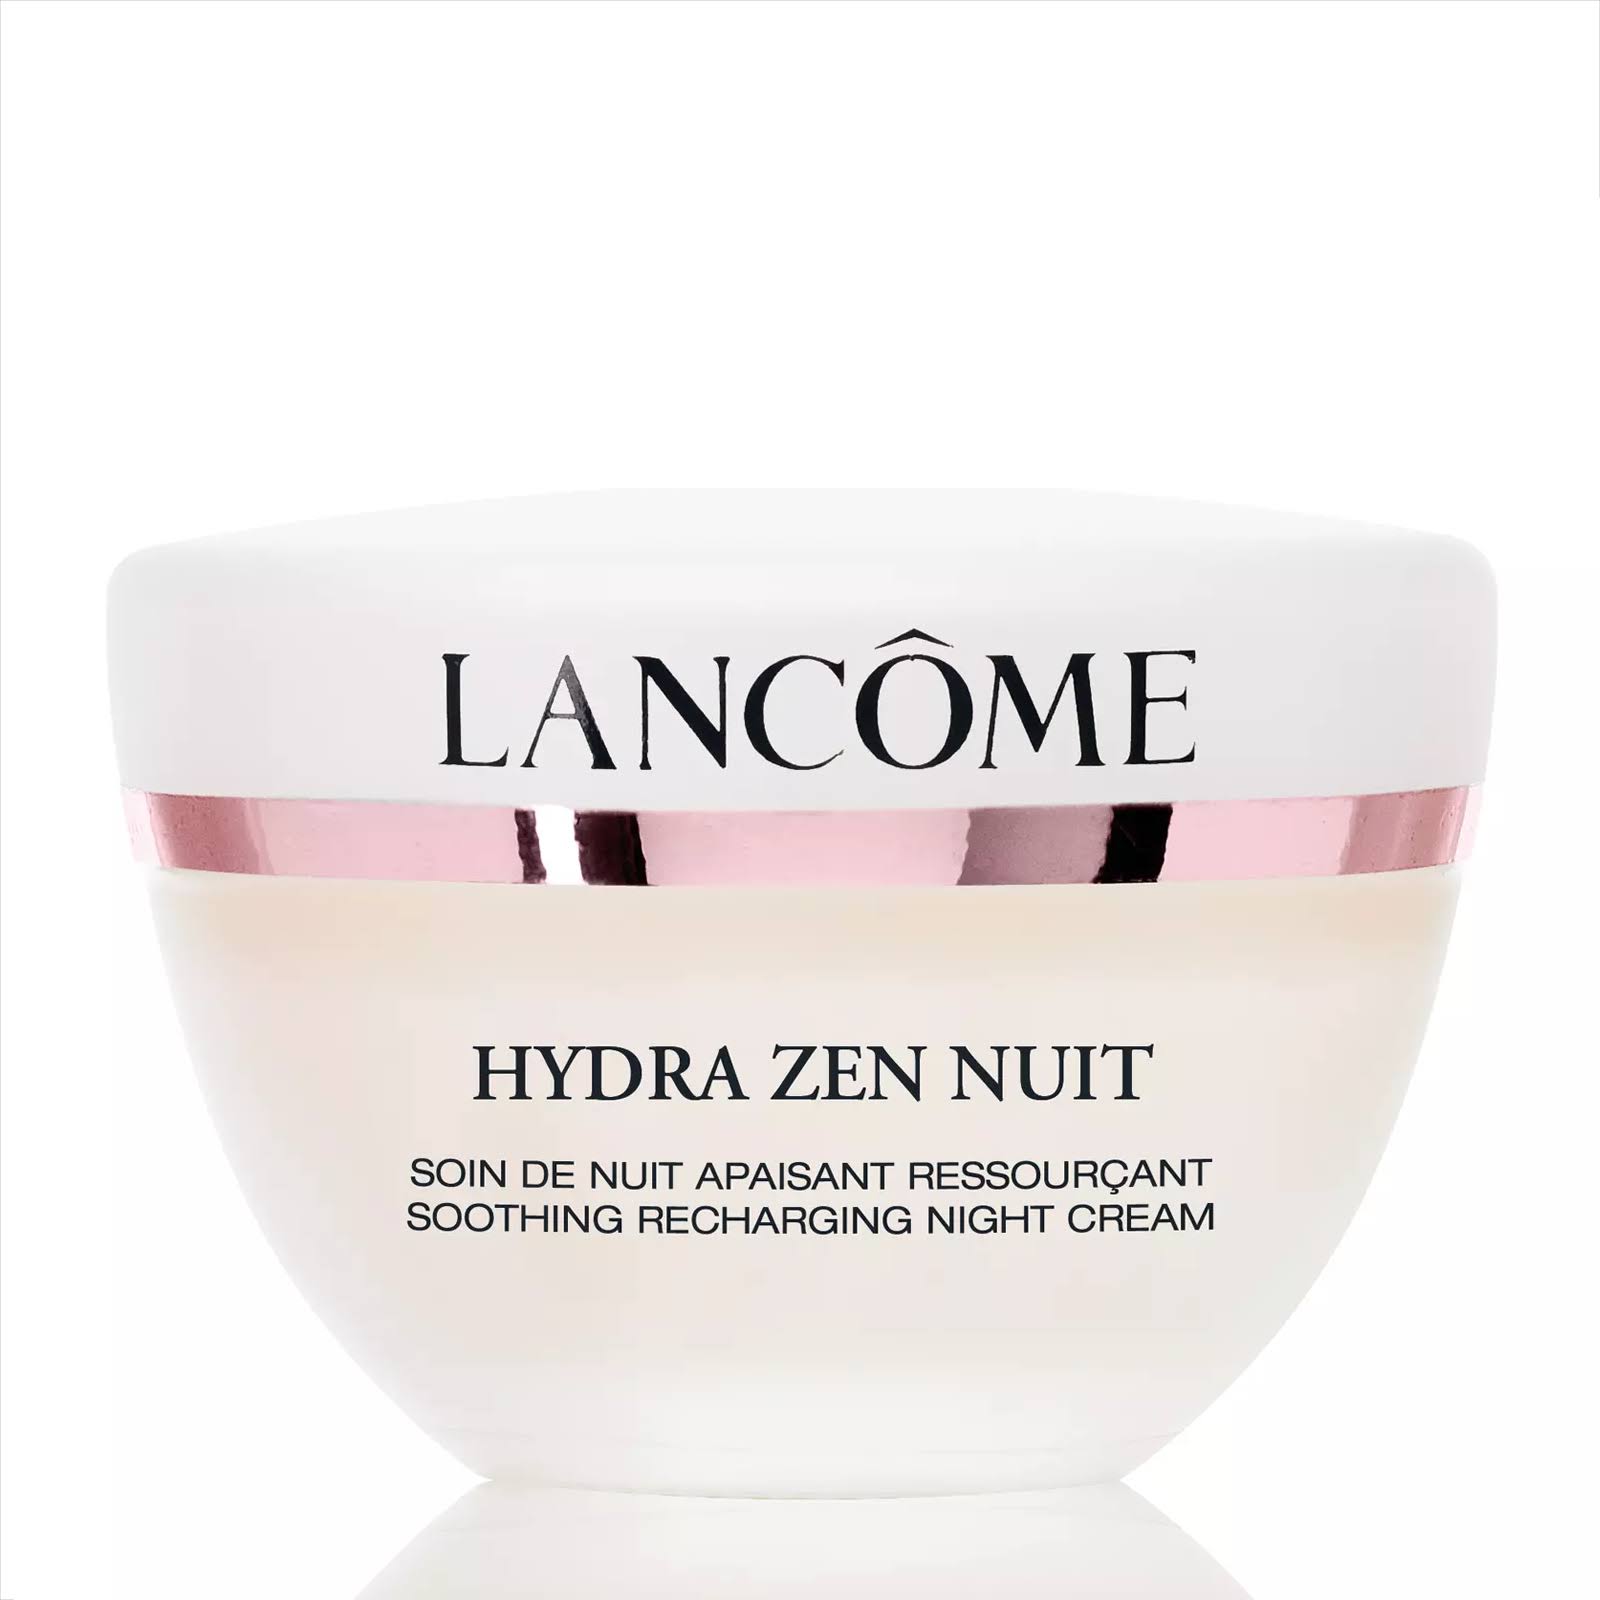 Lancome Hydra Zen Nuit Soothing Recharging Night Cream - 50ml